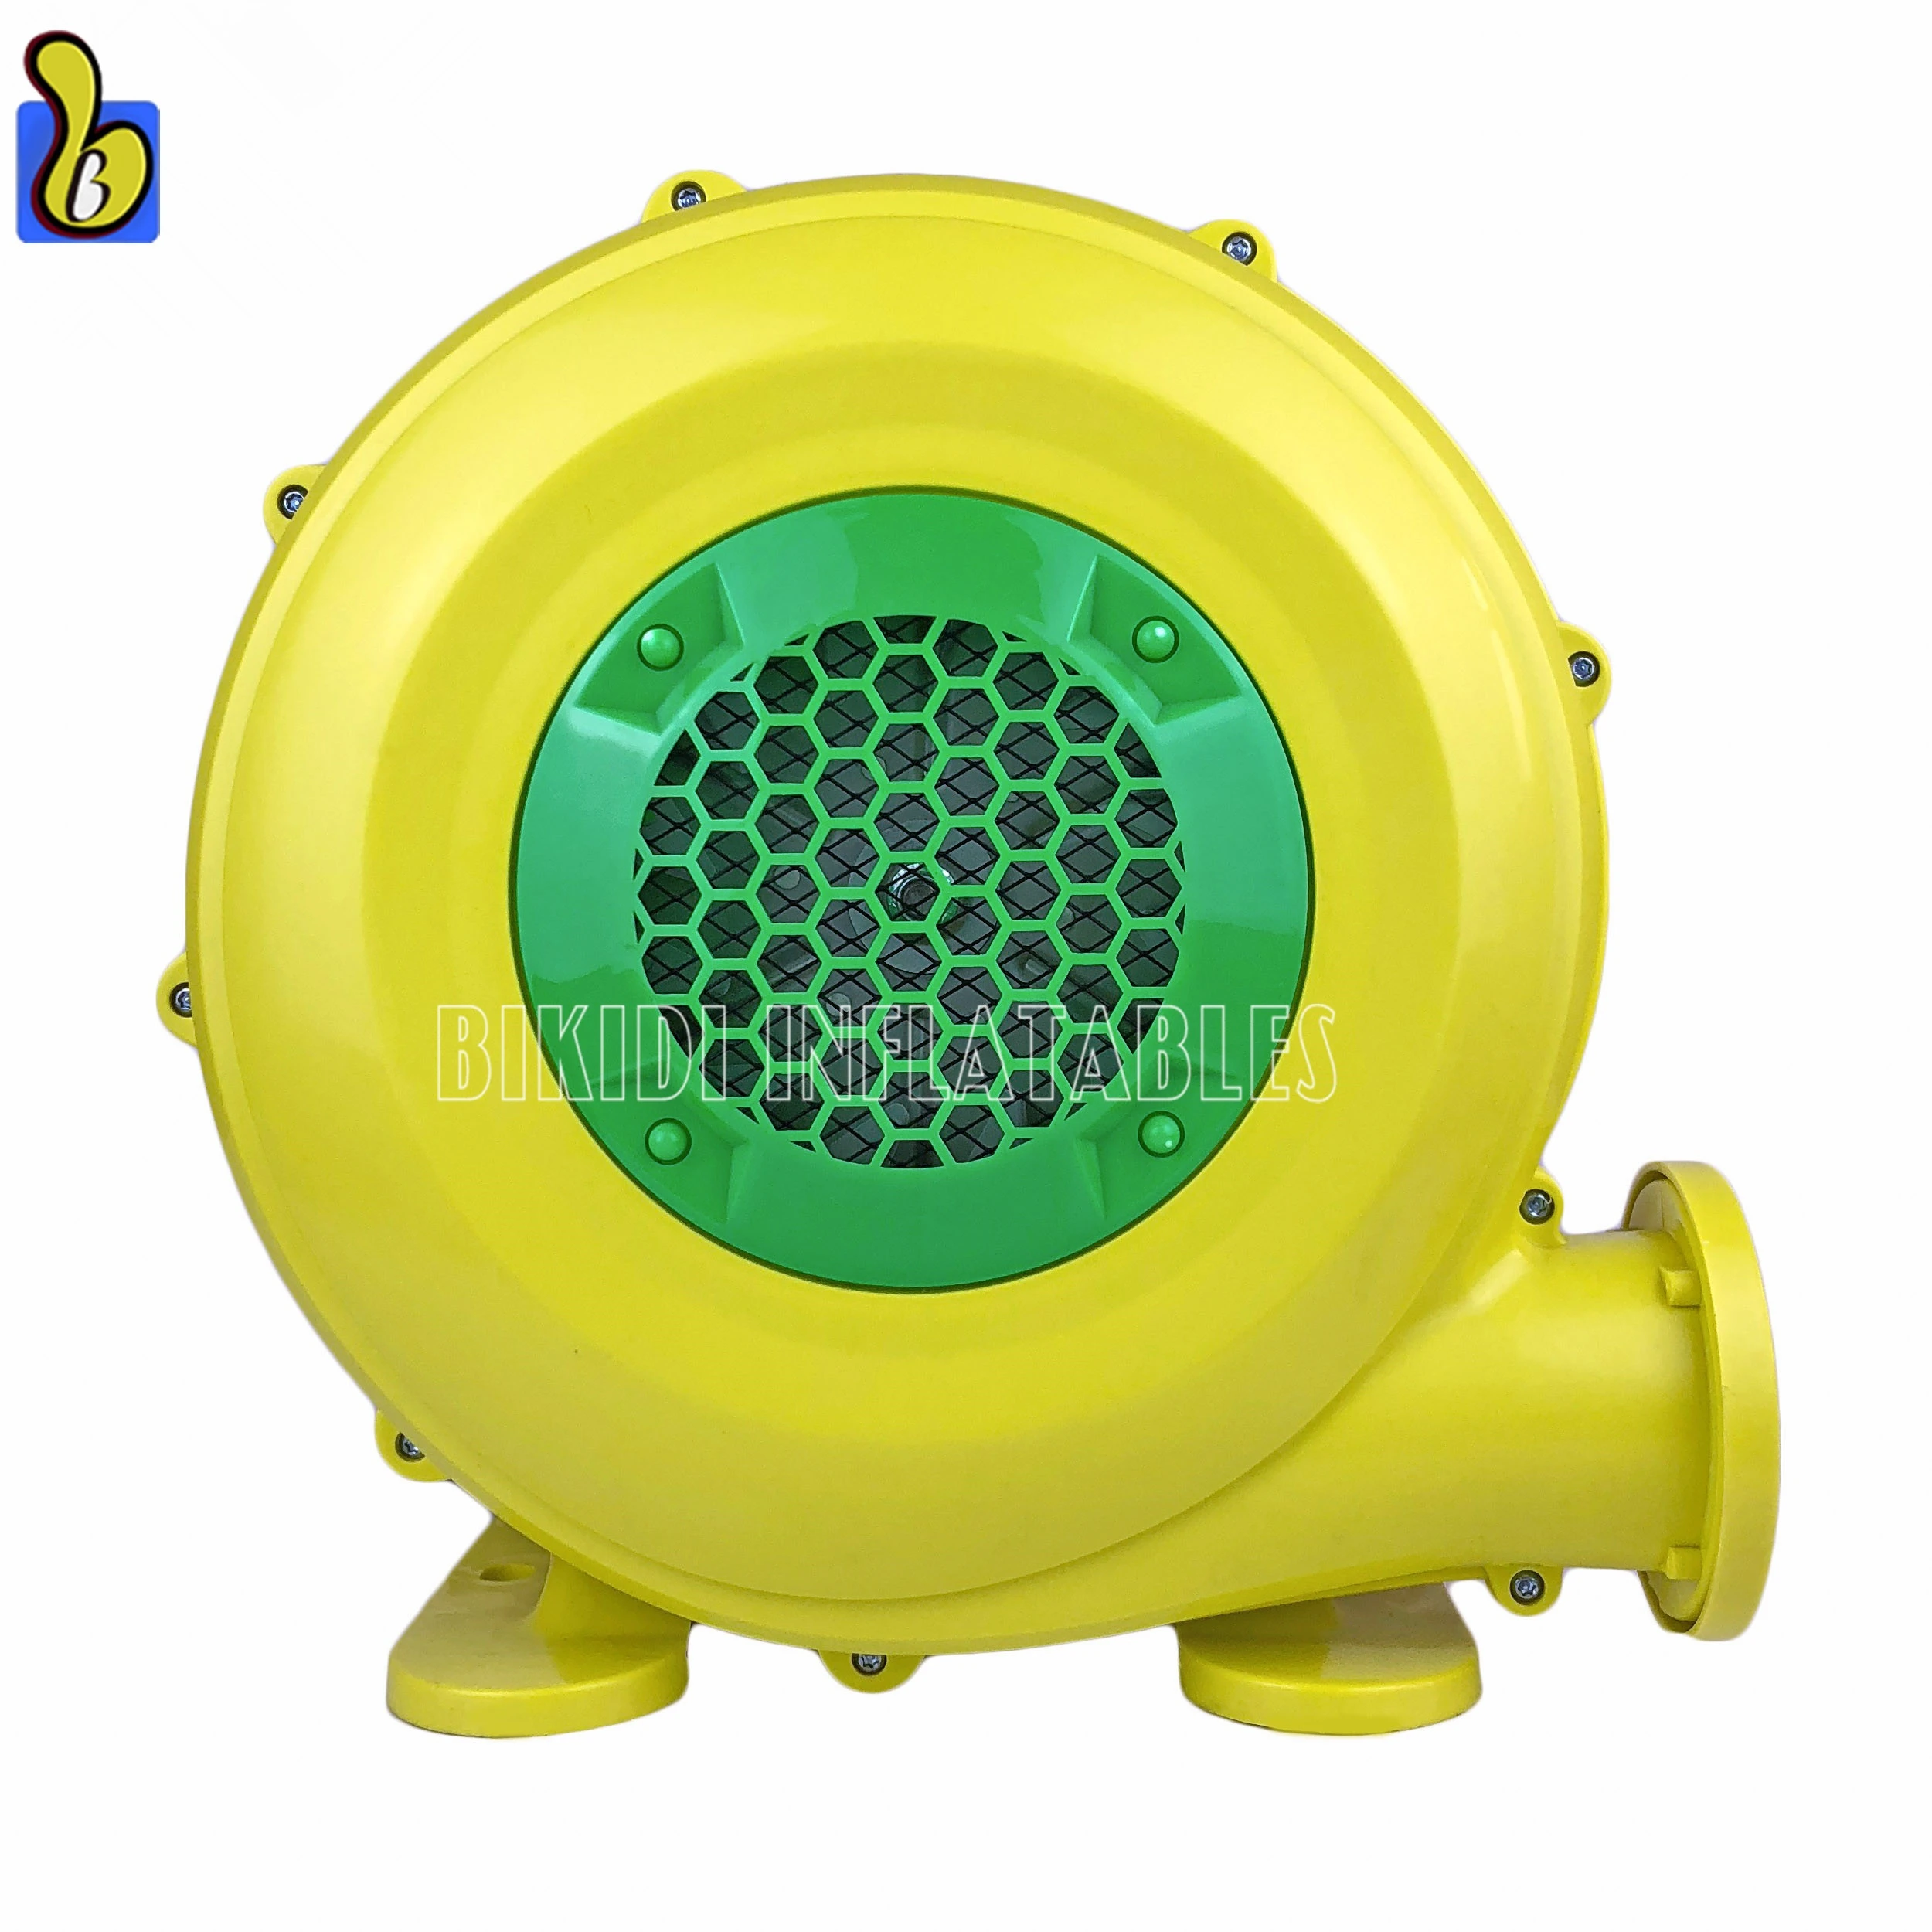 Yellow/Green 450 Watt Air Blower With Optional Plug